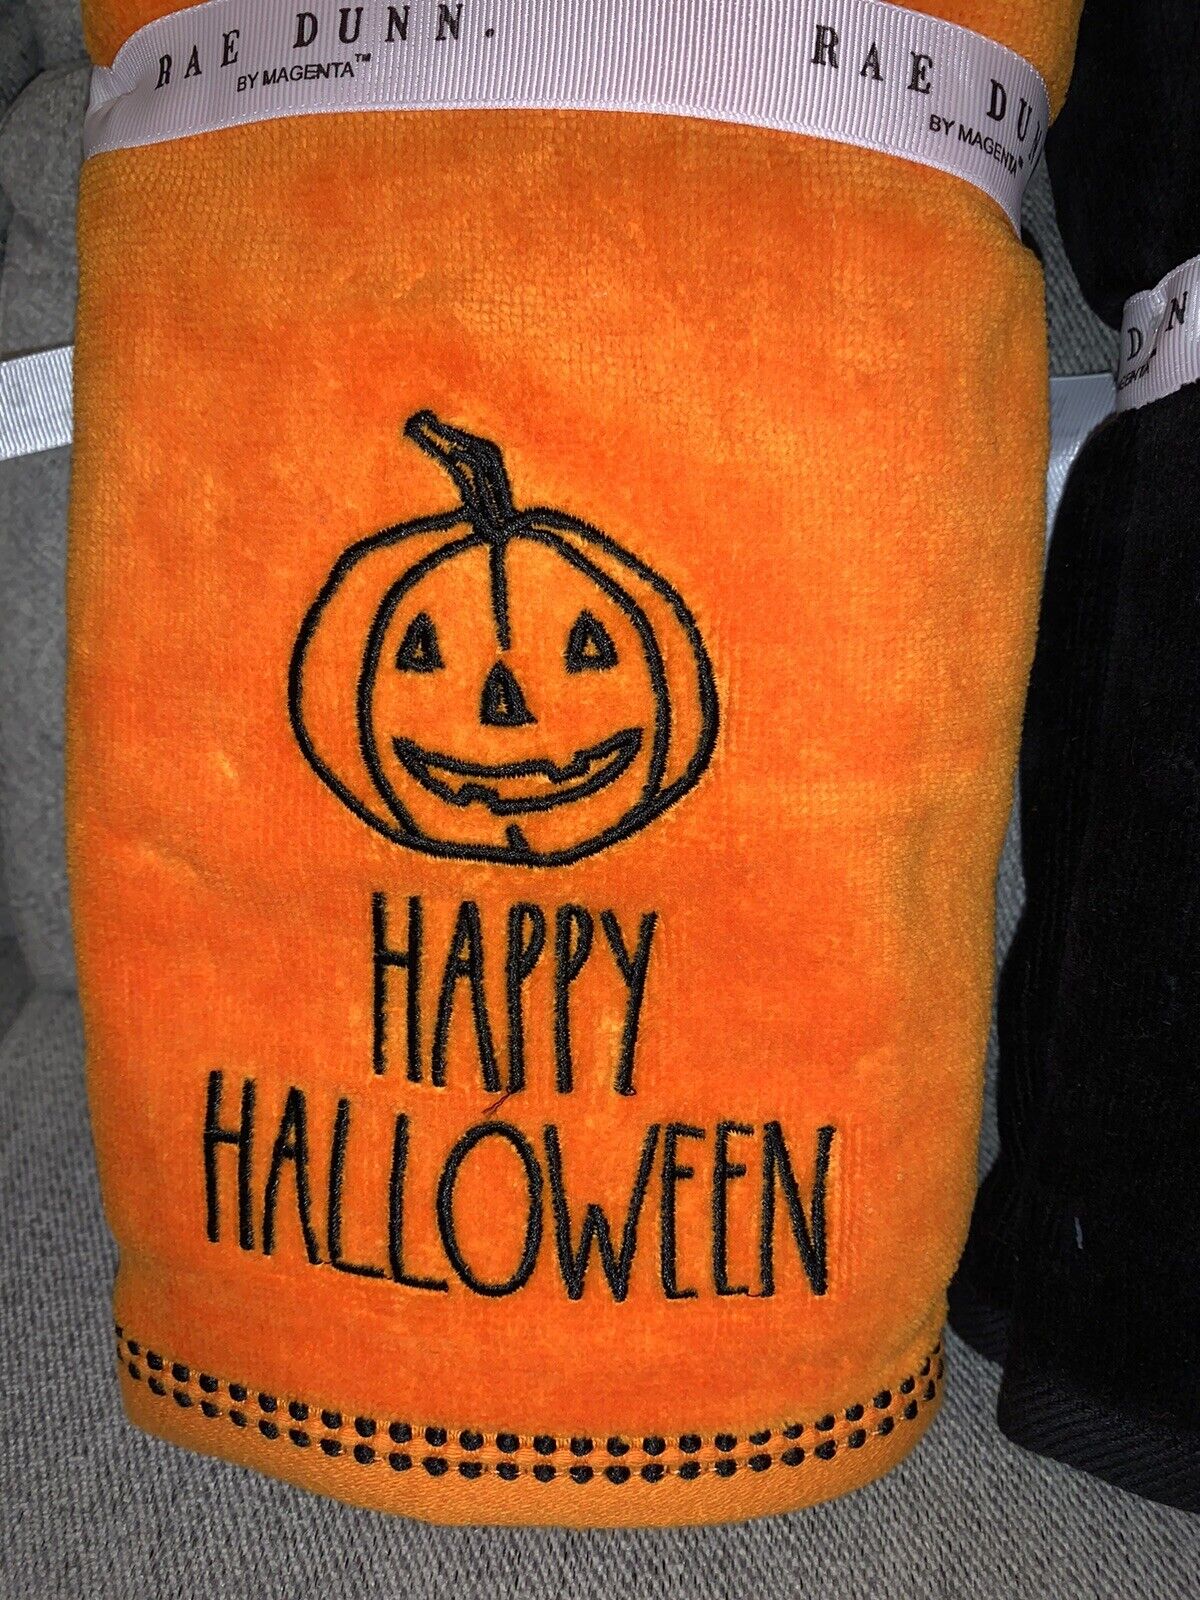 Rae Dunn Halloween Orange Black White Hand Towels Embroidered 